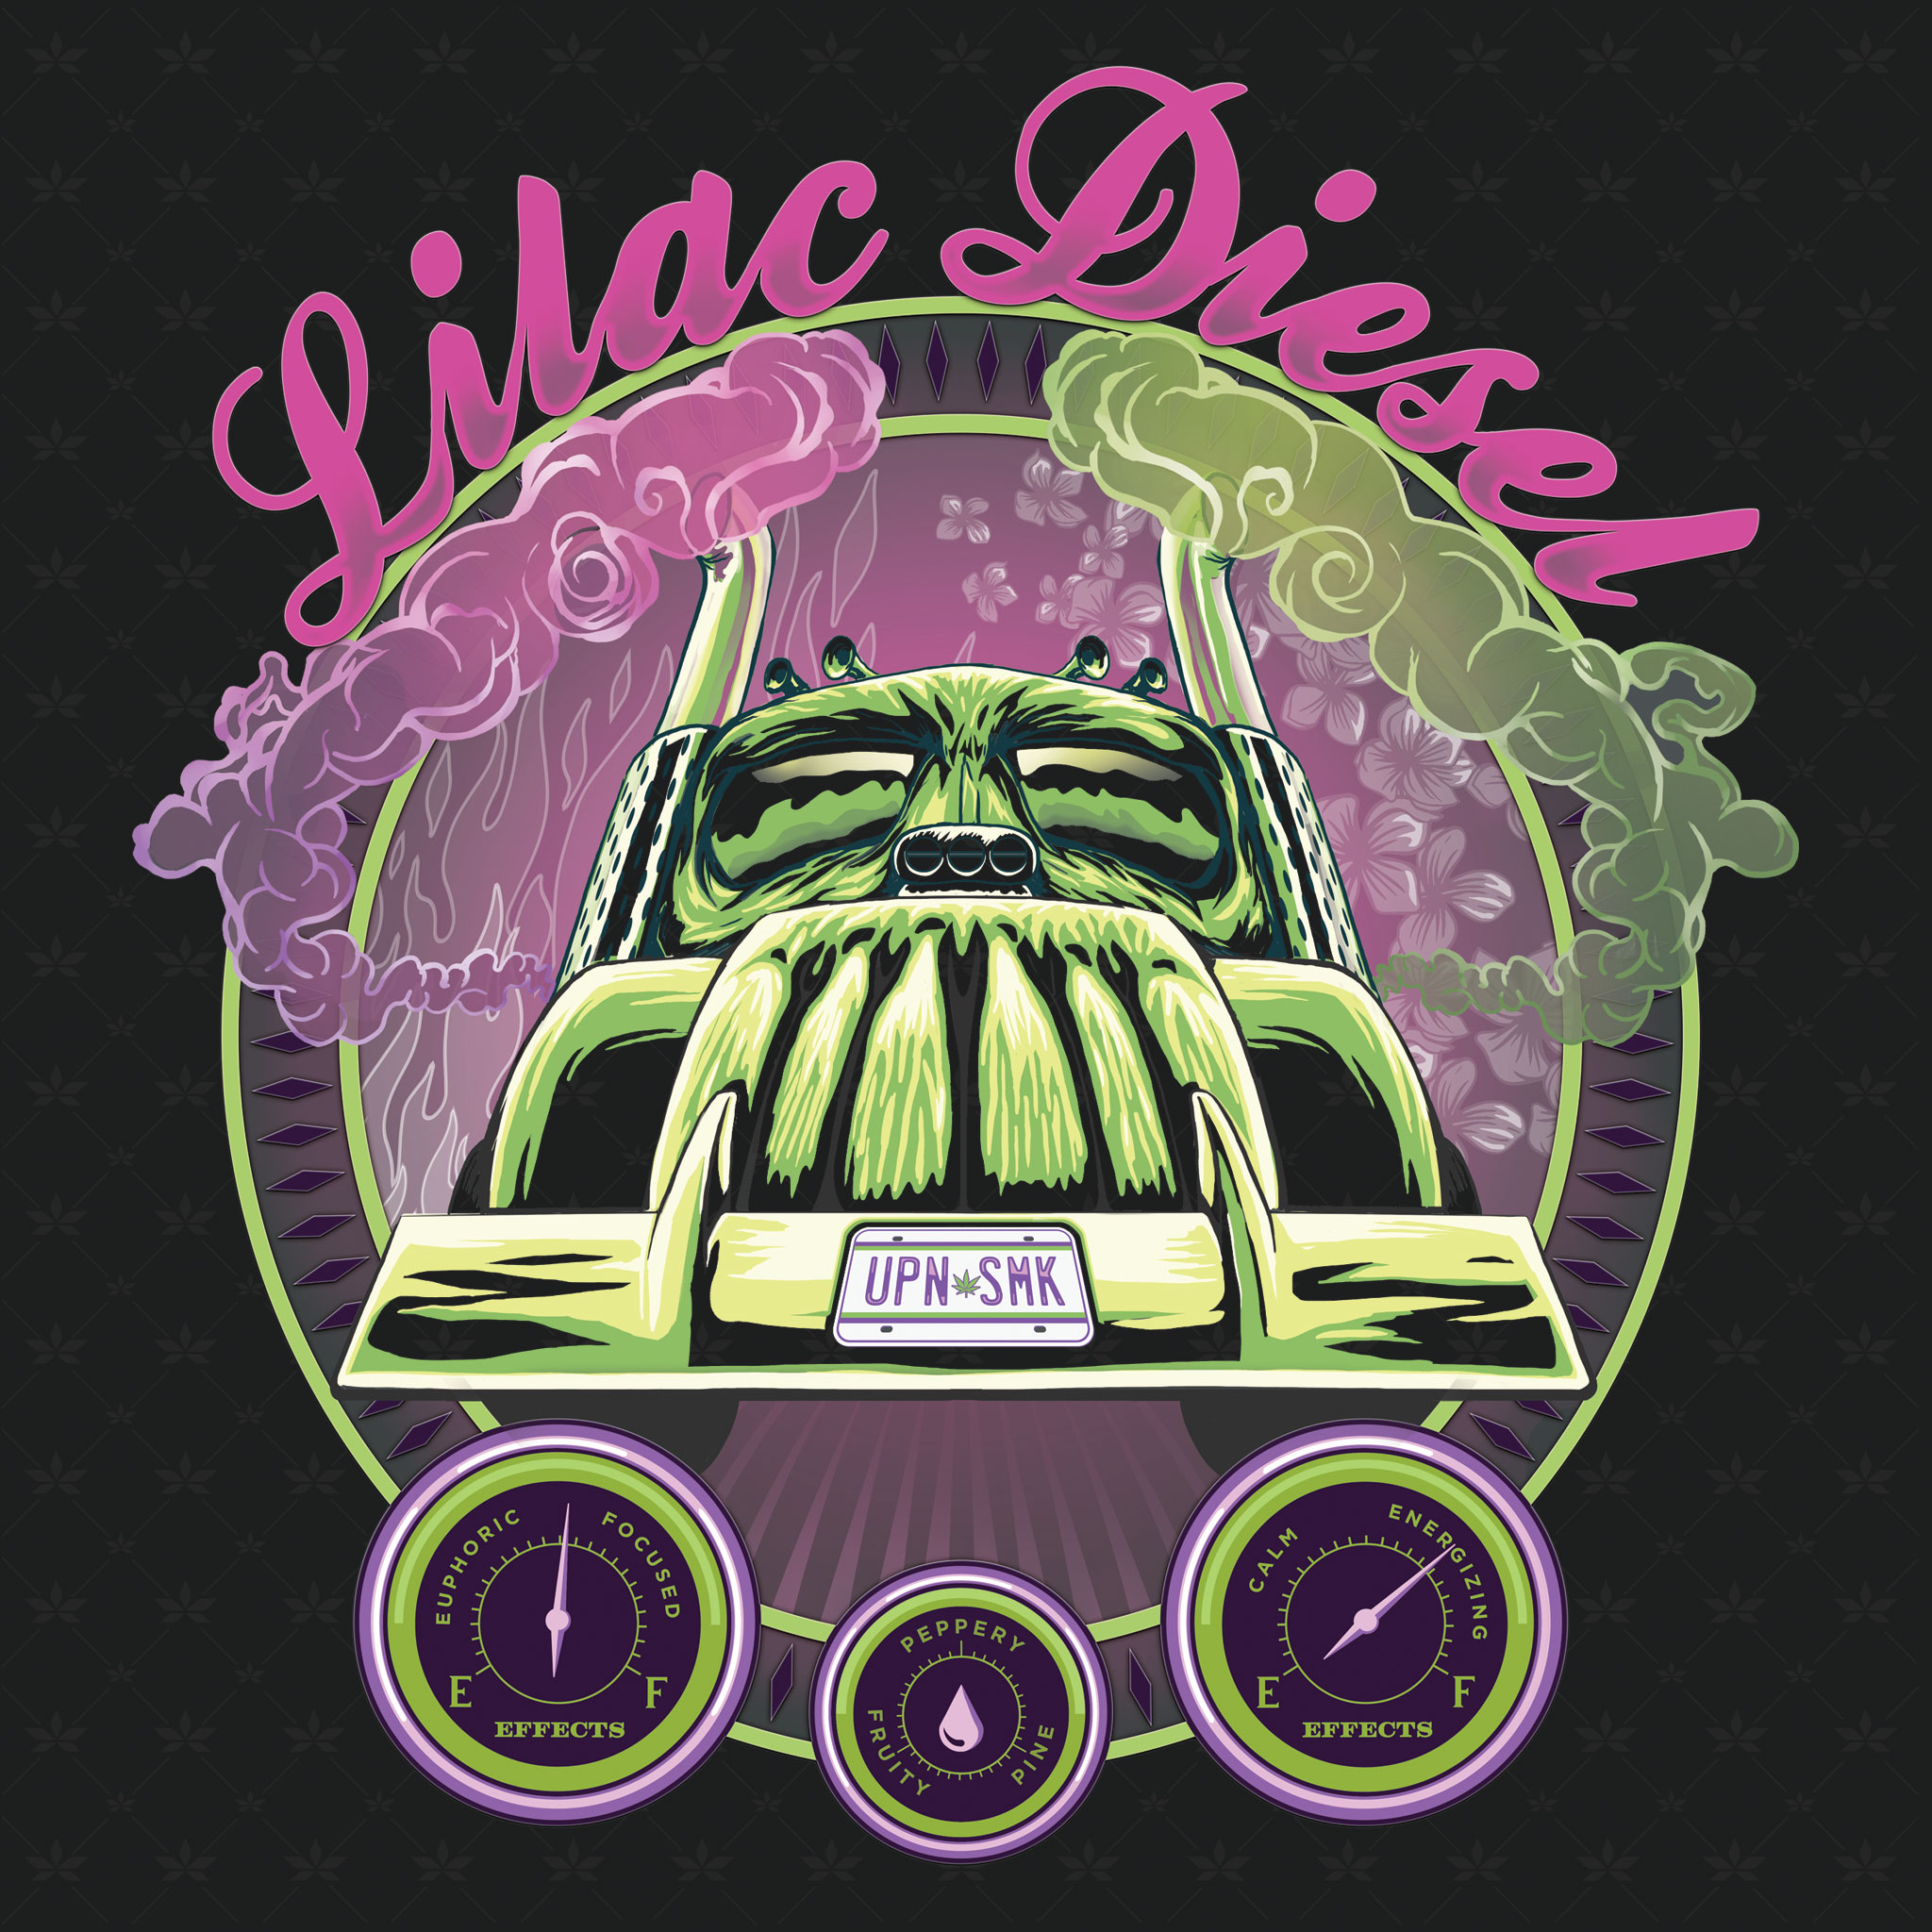 Lilac Diesel Strain